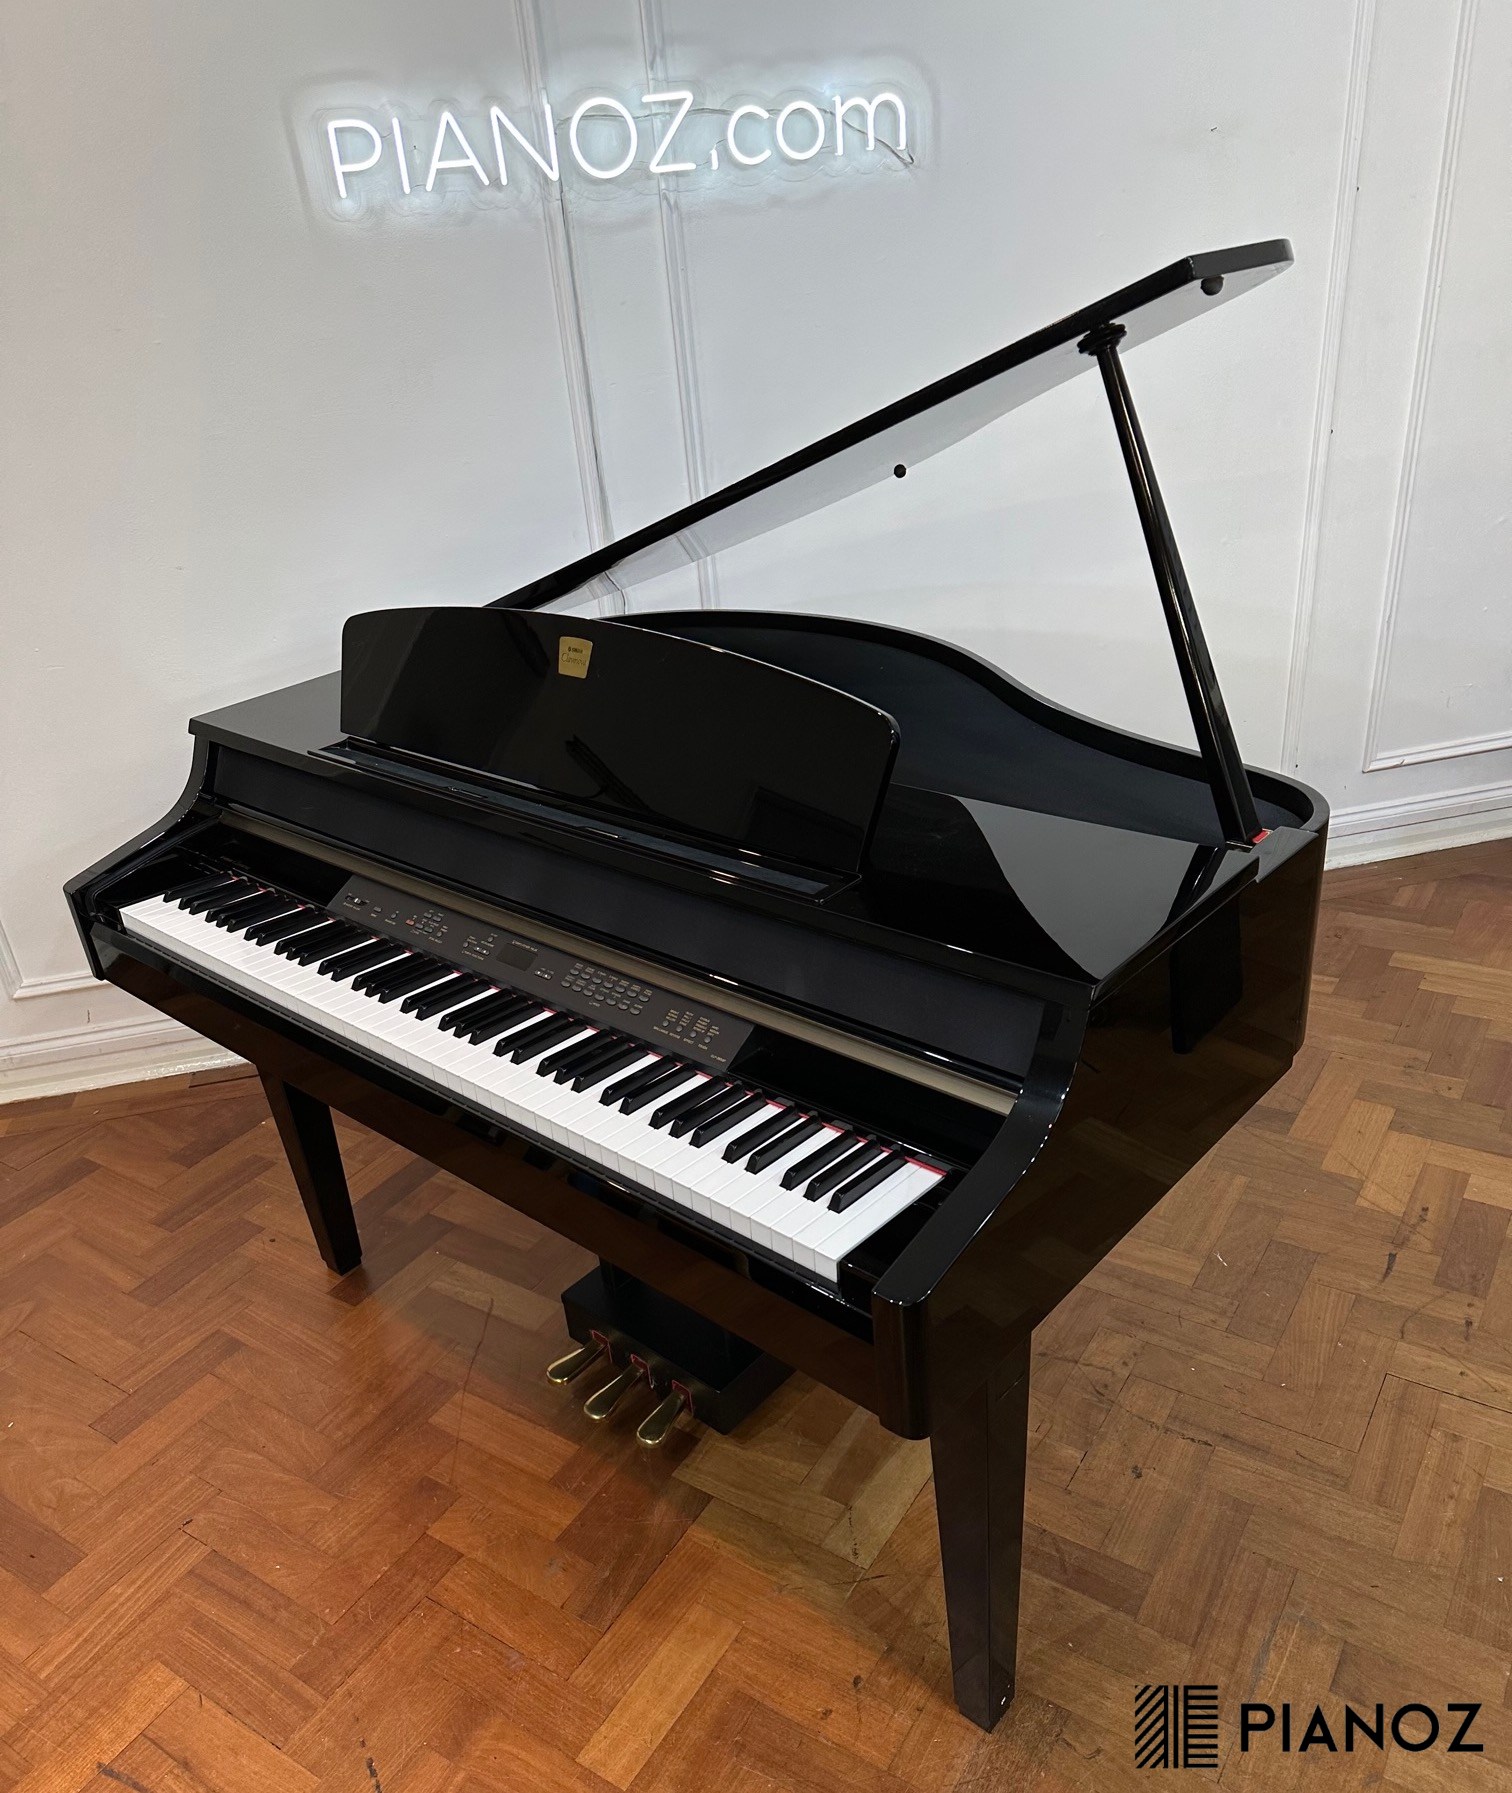 Yamaha Clavinova Baby Grand Digital Piano piano for sale in UK